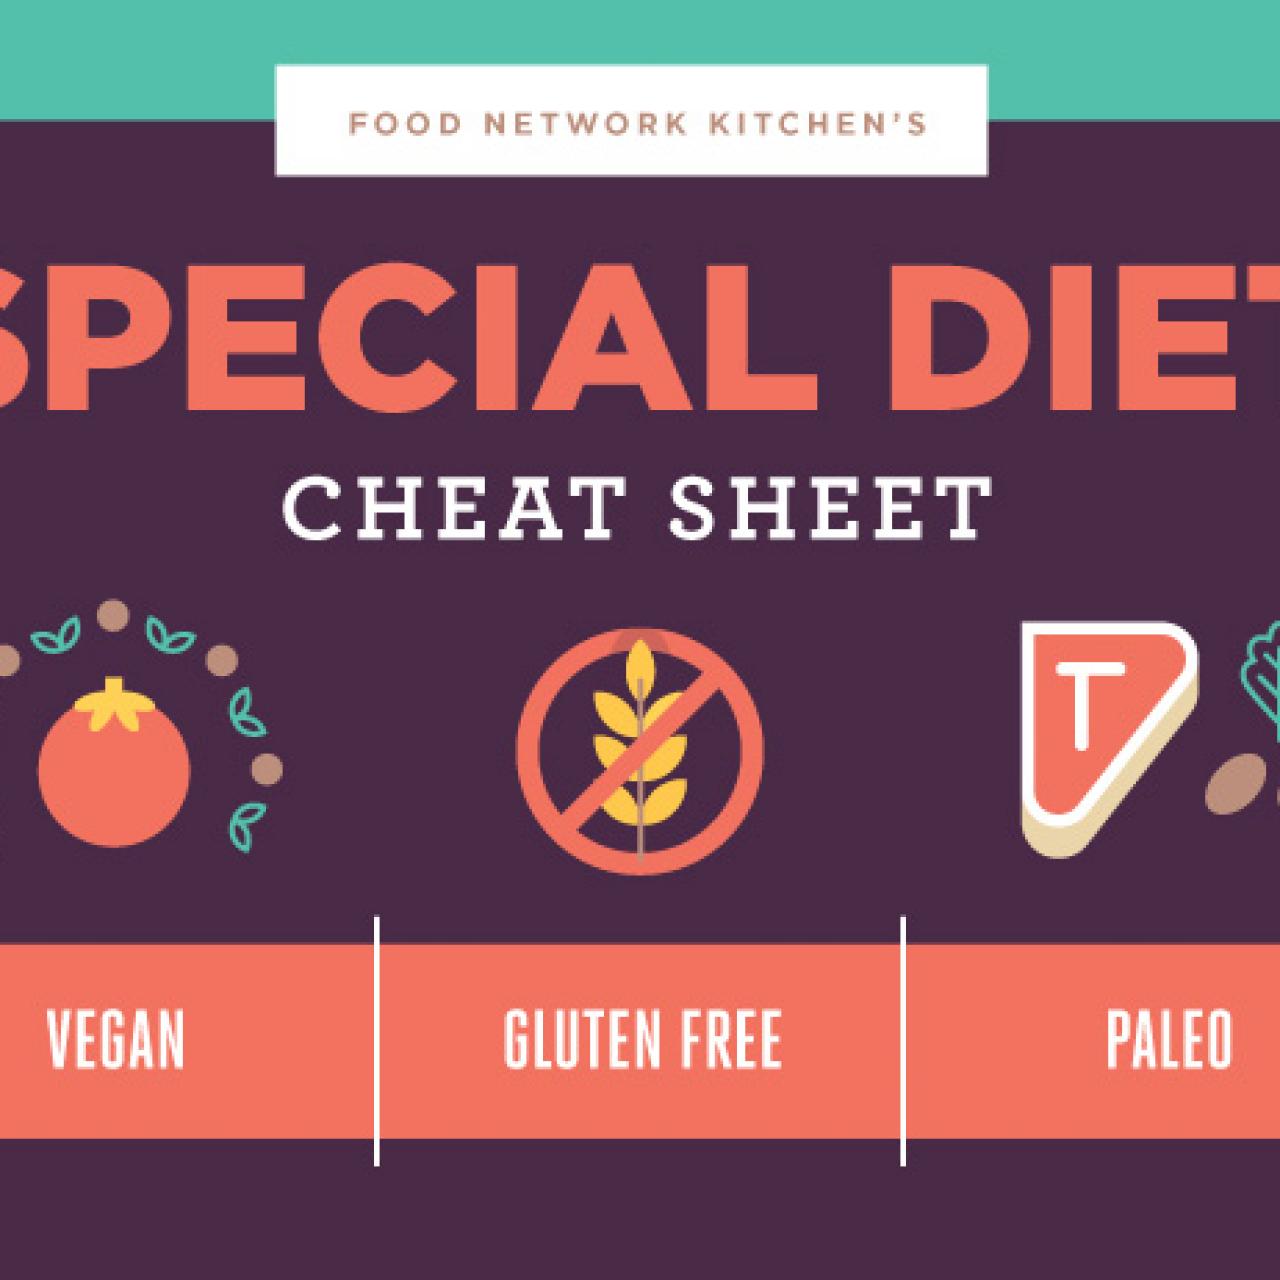 infographic kitchen cheat sheet